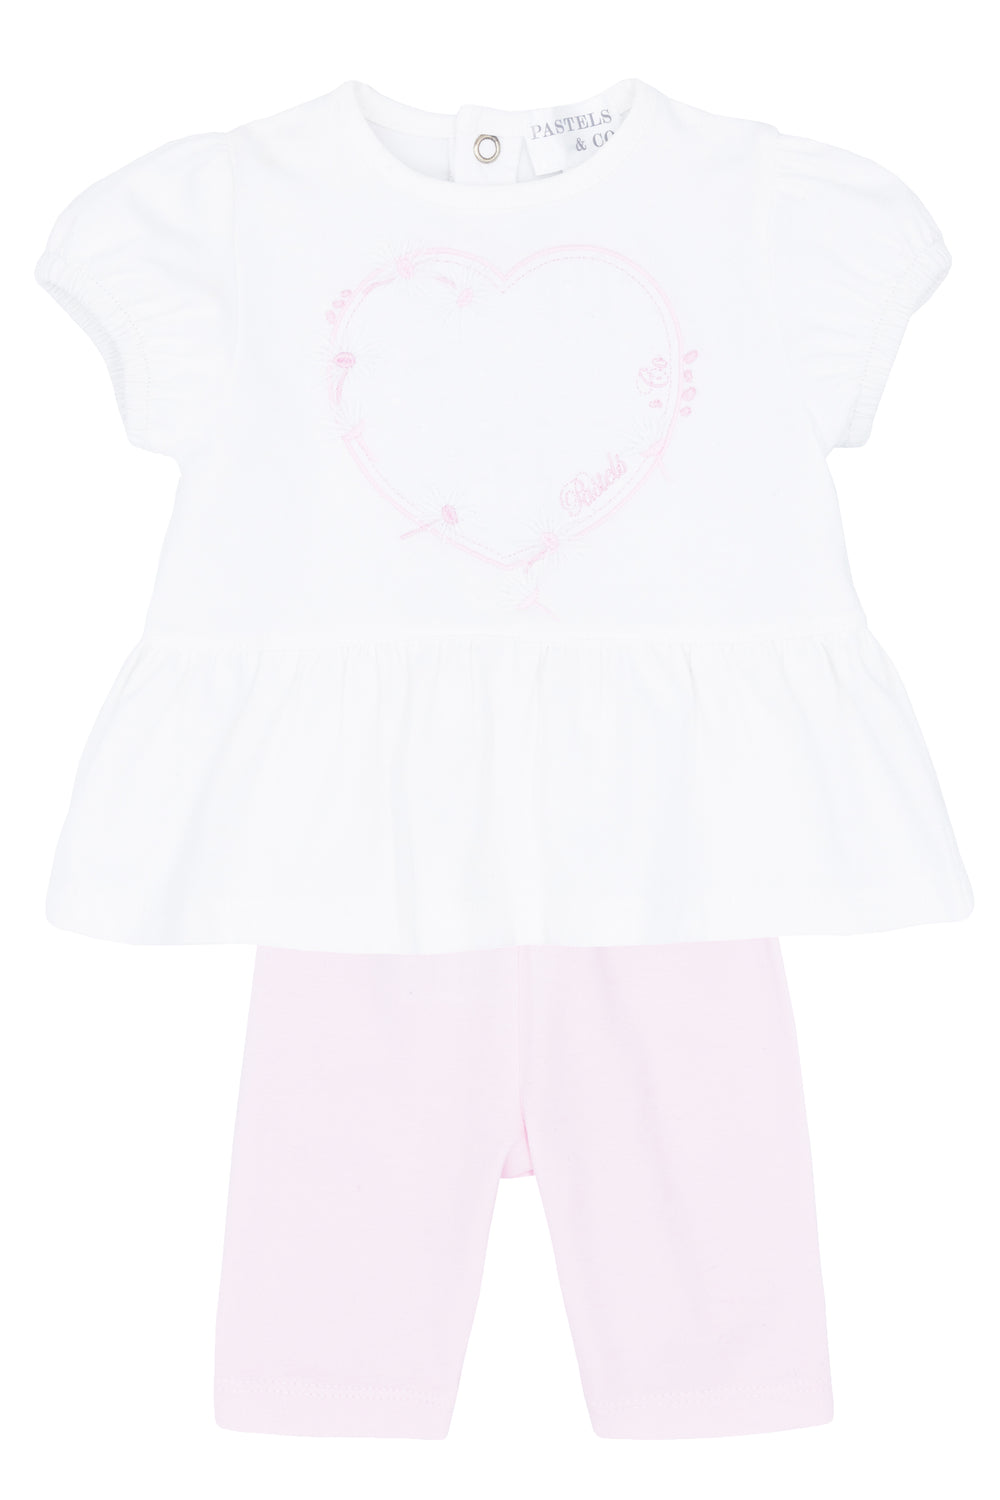 Pastels & Co "Colette" White & Pink Blouse & Leggings | Millie and John